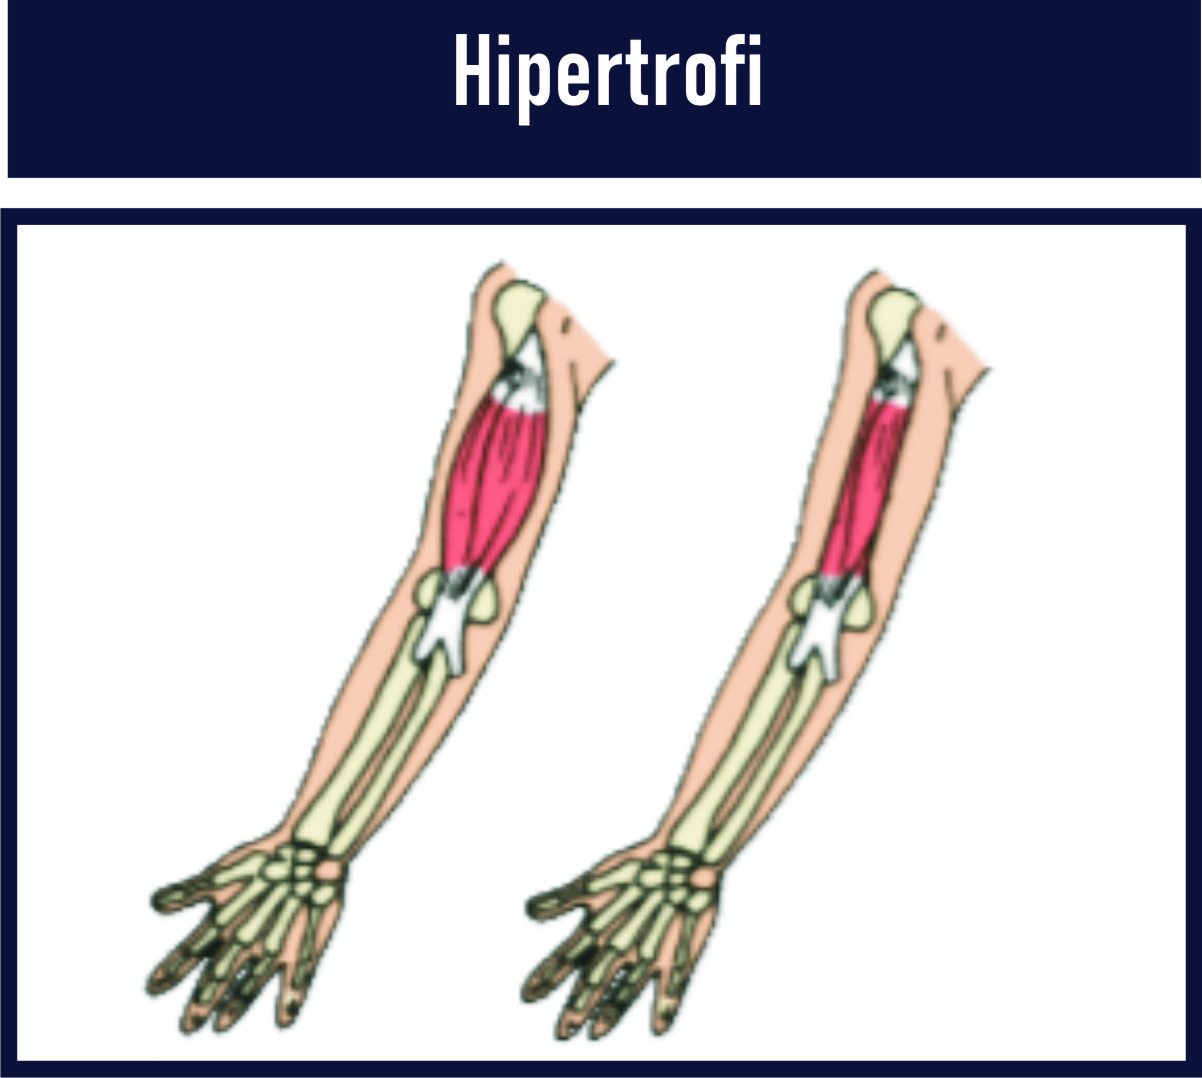 hipertrofi adalah Kelainan otot yang membesar dan menjadi lebih kuat karena sel otot diberikan kegiatan/aktivitas yang terus-menerus secara berlebihan.